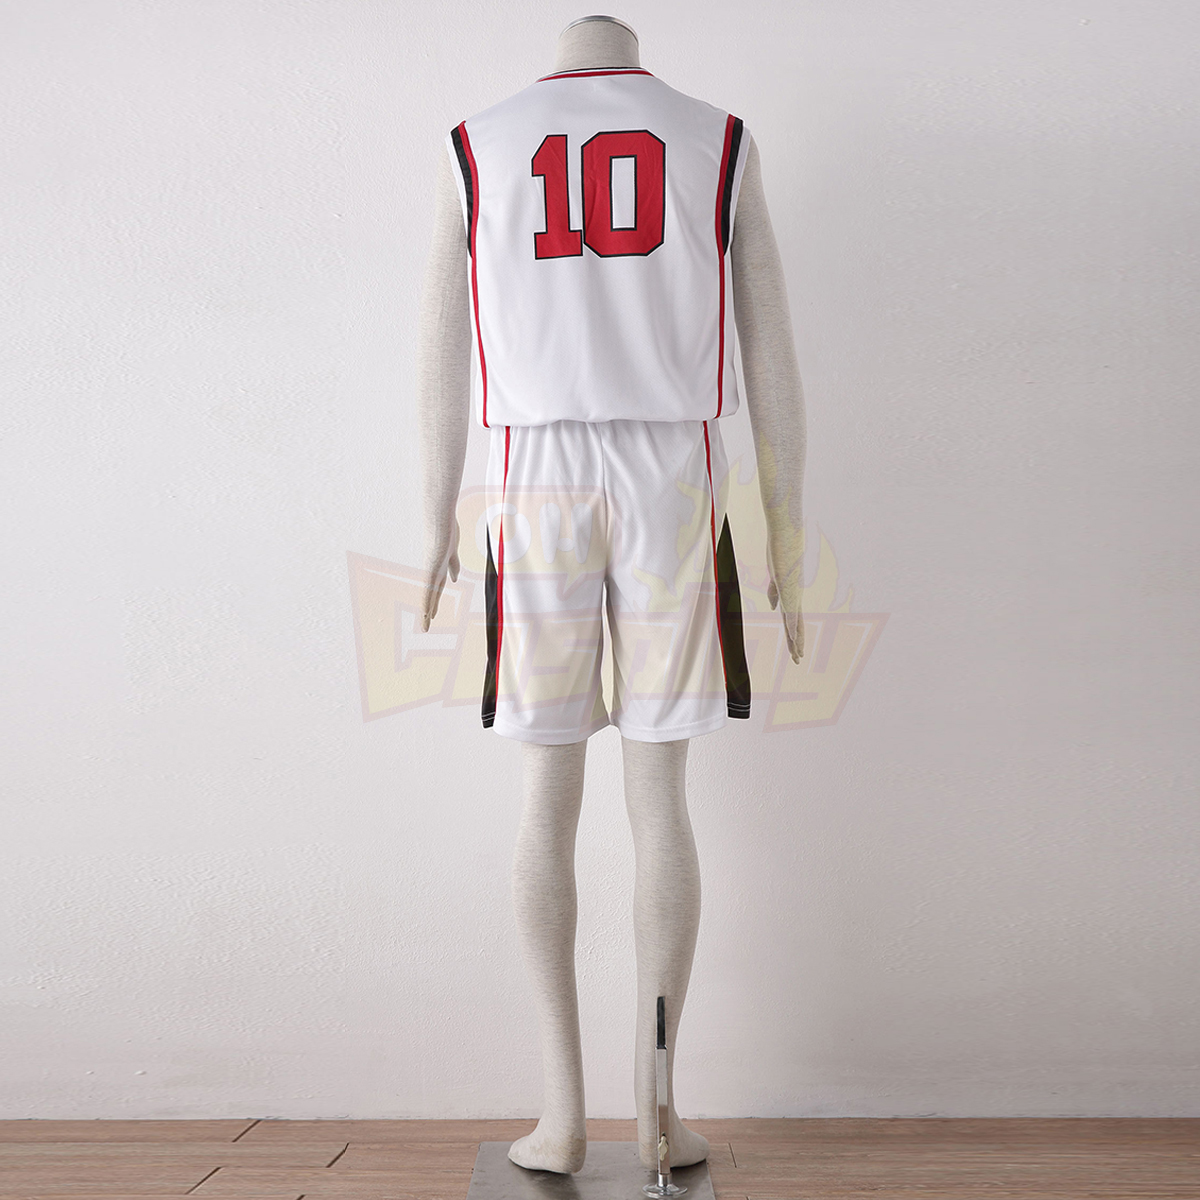 Kuroko\'s Basketball Taiga Kagami 3RD Cosplay Costumes Deluxe Edition [A166]